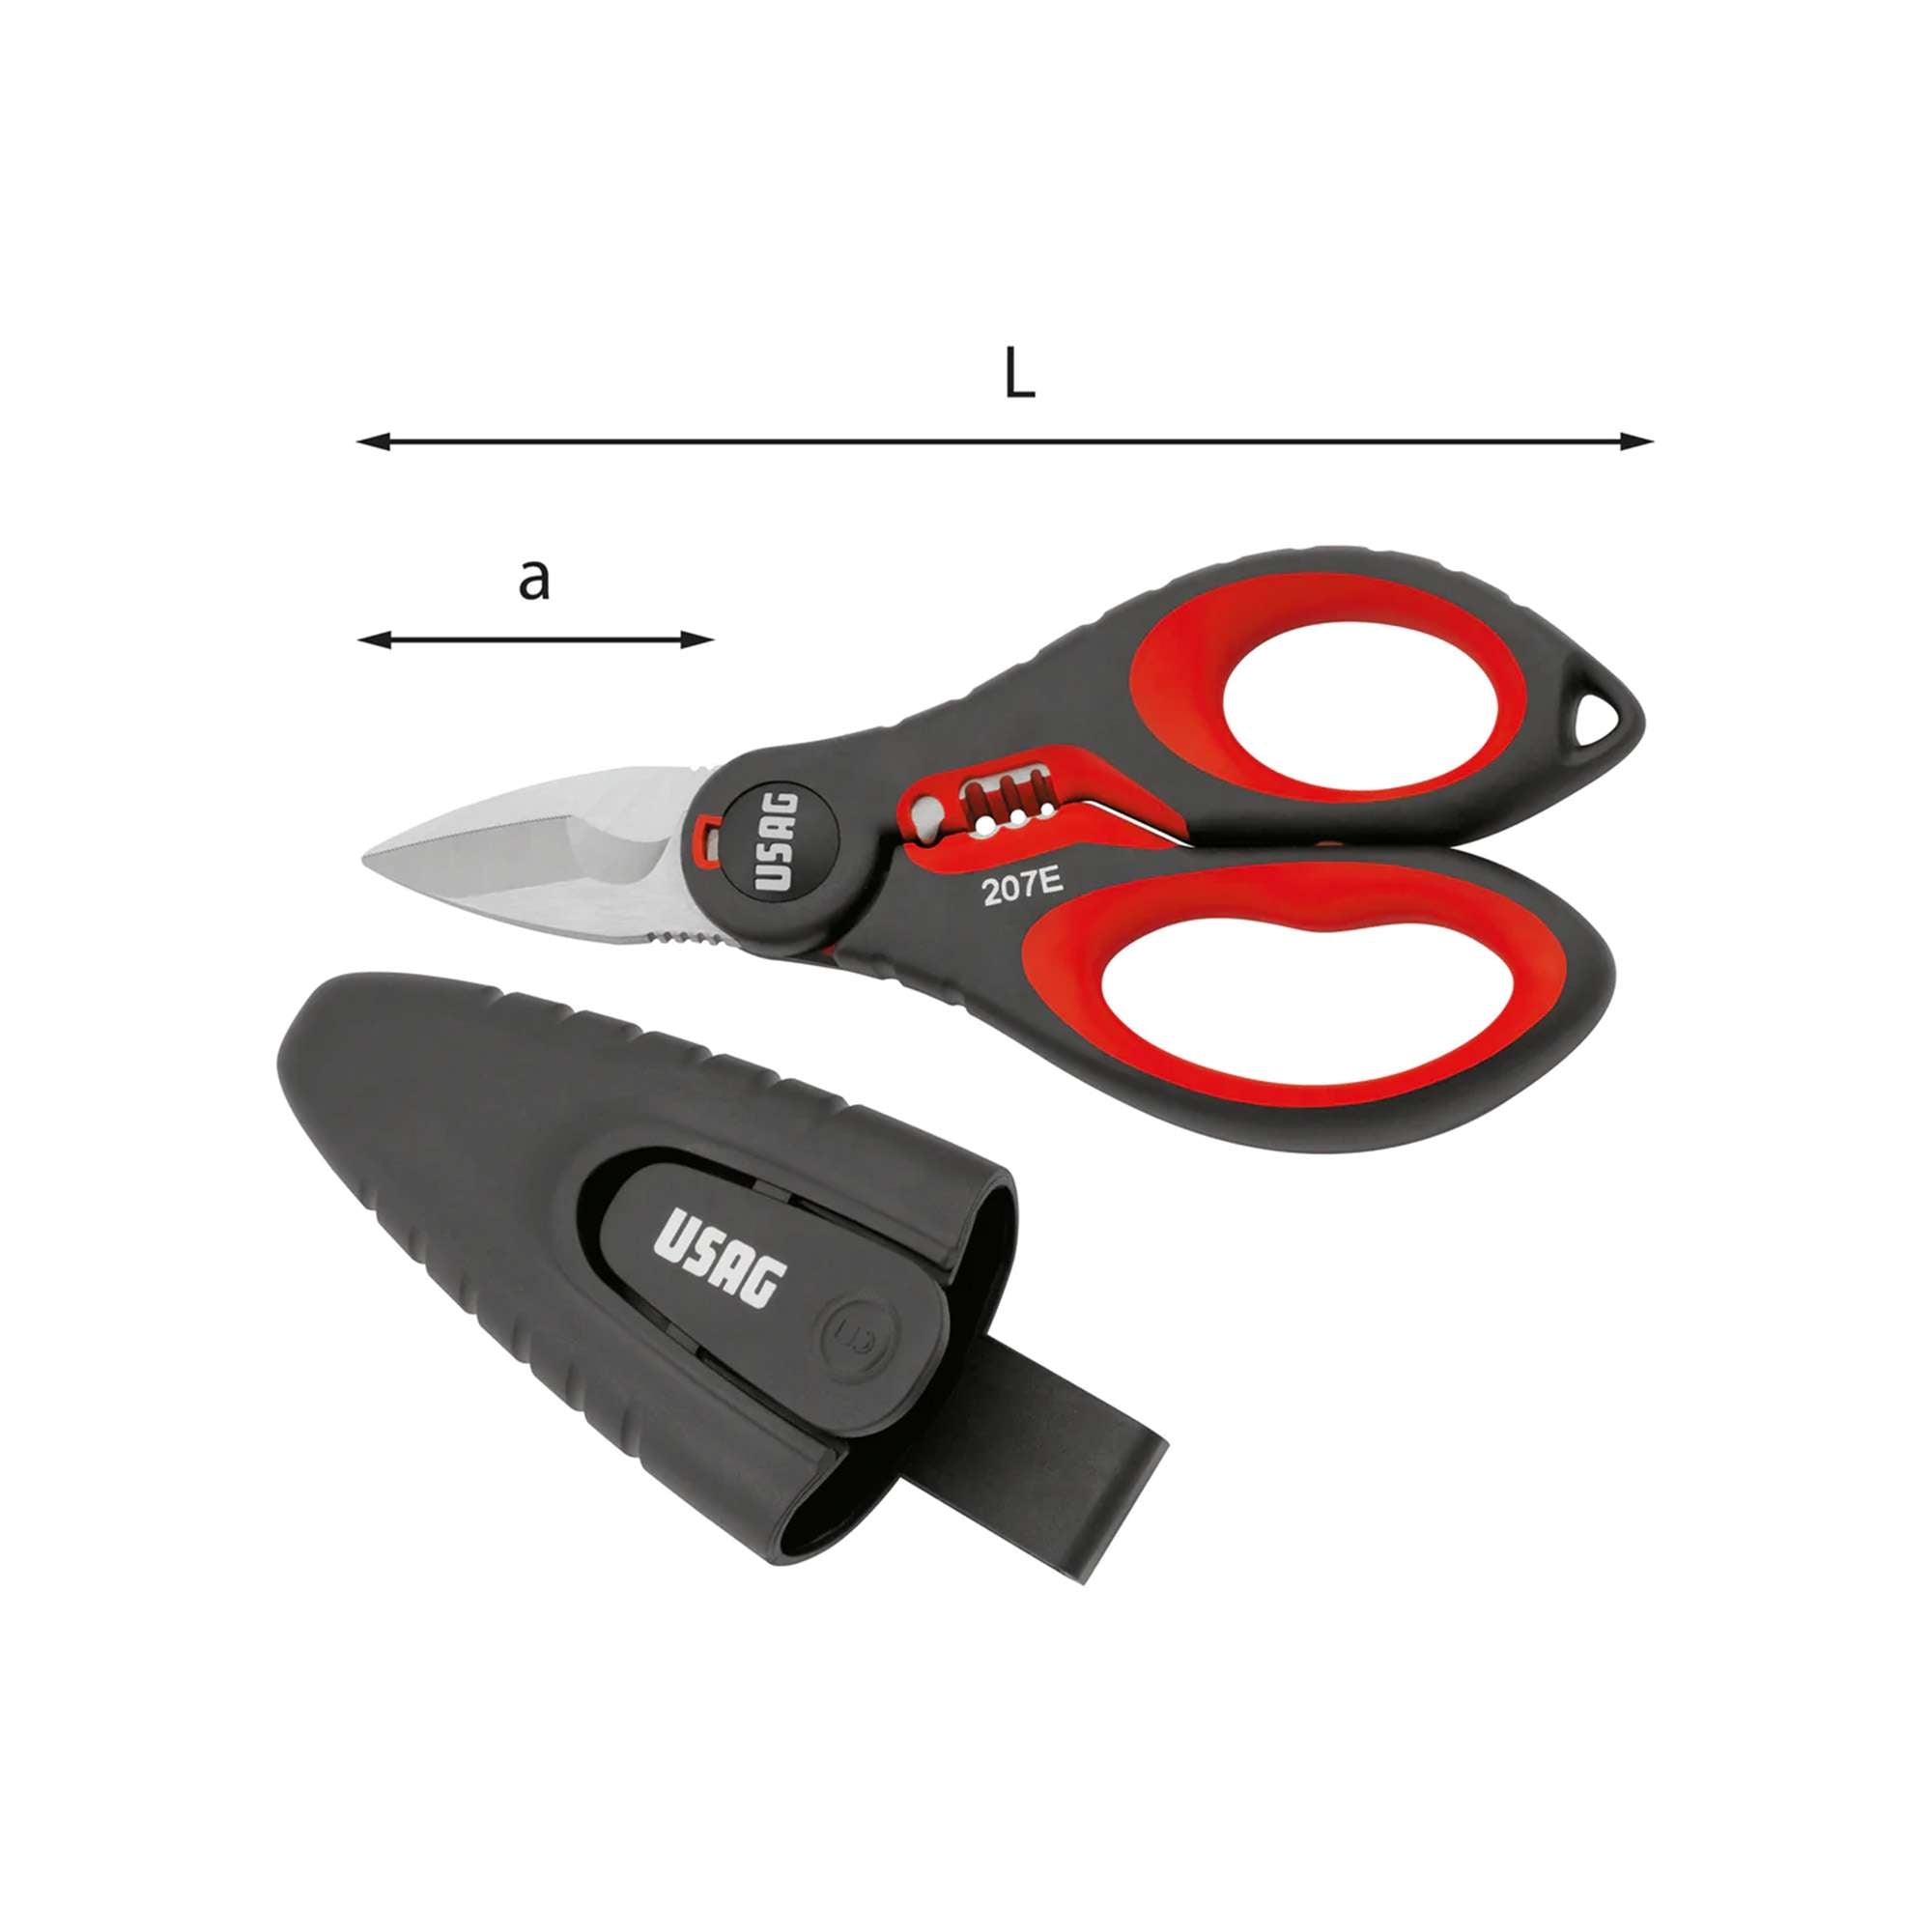 L. 155mm Professional scissors for electricians a 40mm Usag 207 E